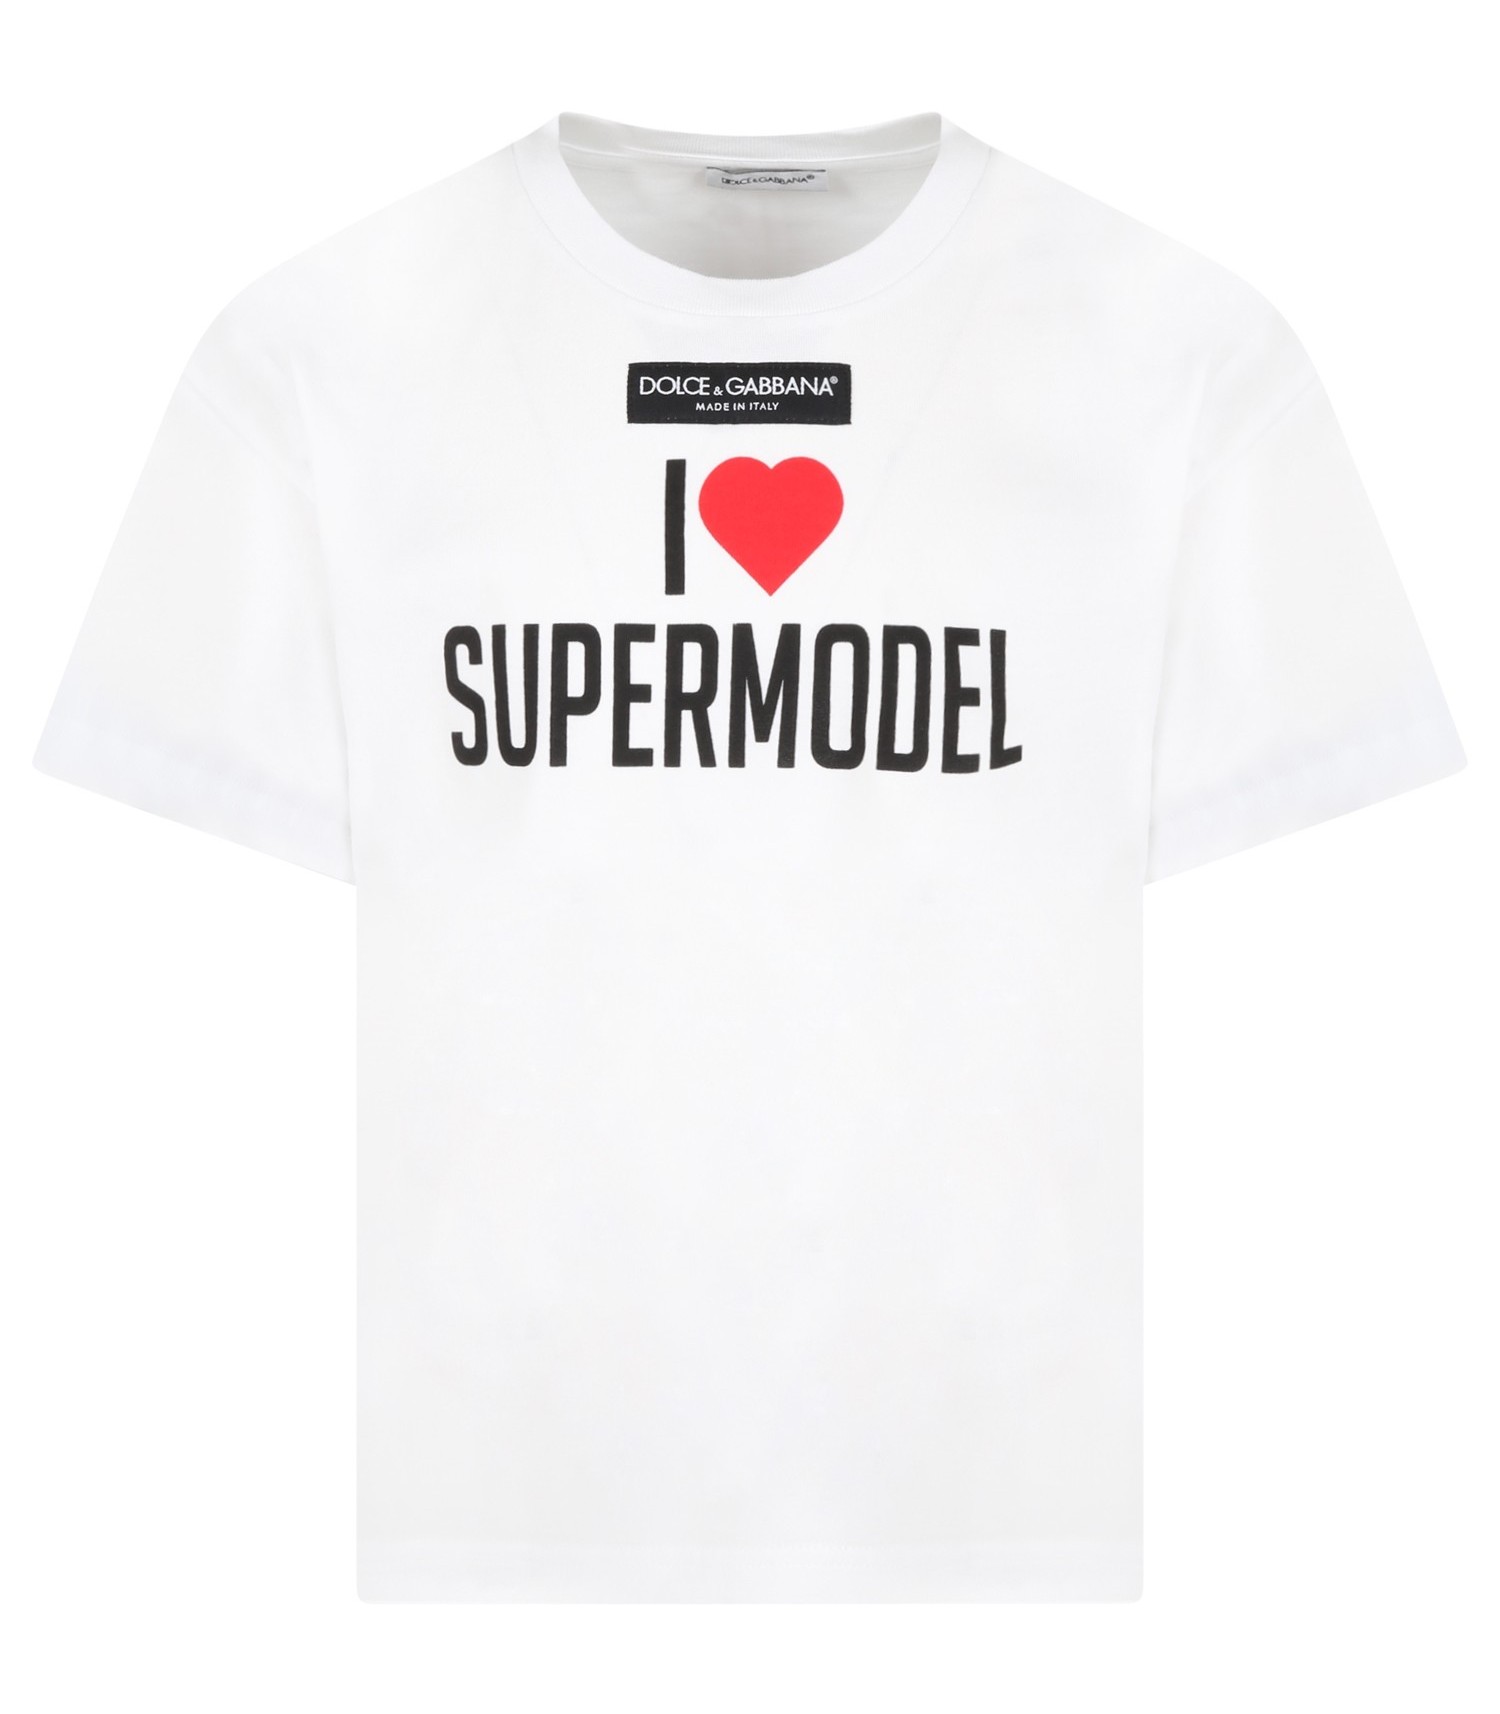 perfume cousin Powerful Dolce & Gabbana Kids T-shirt bianca per bambini con logo nero e cuore rosso  - CoccoleBimbi